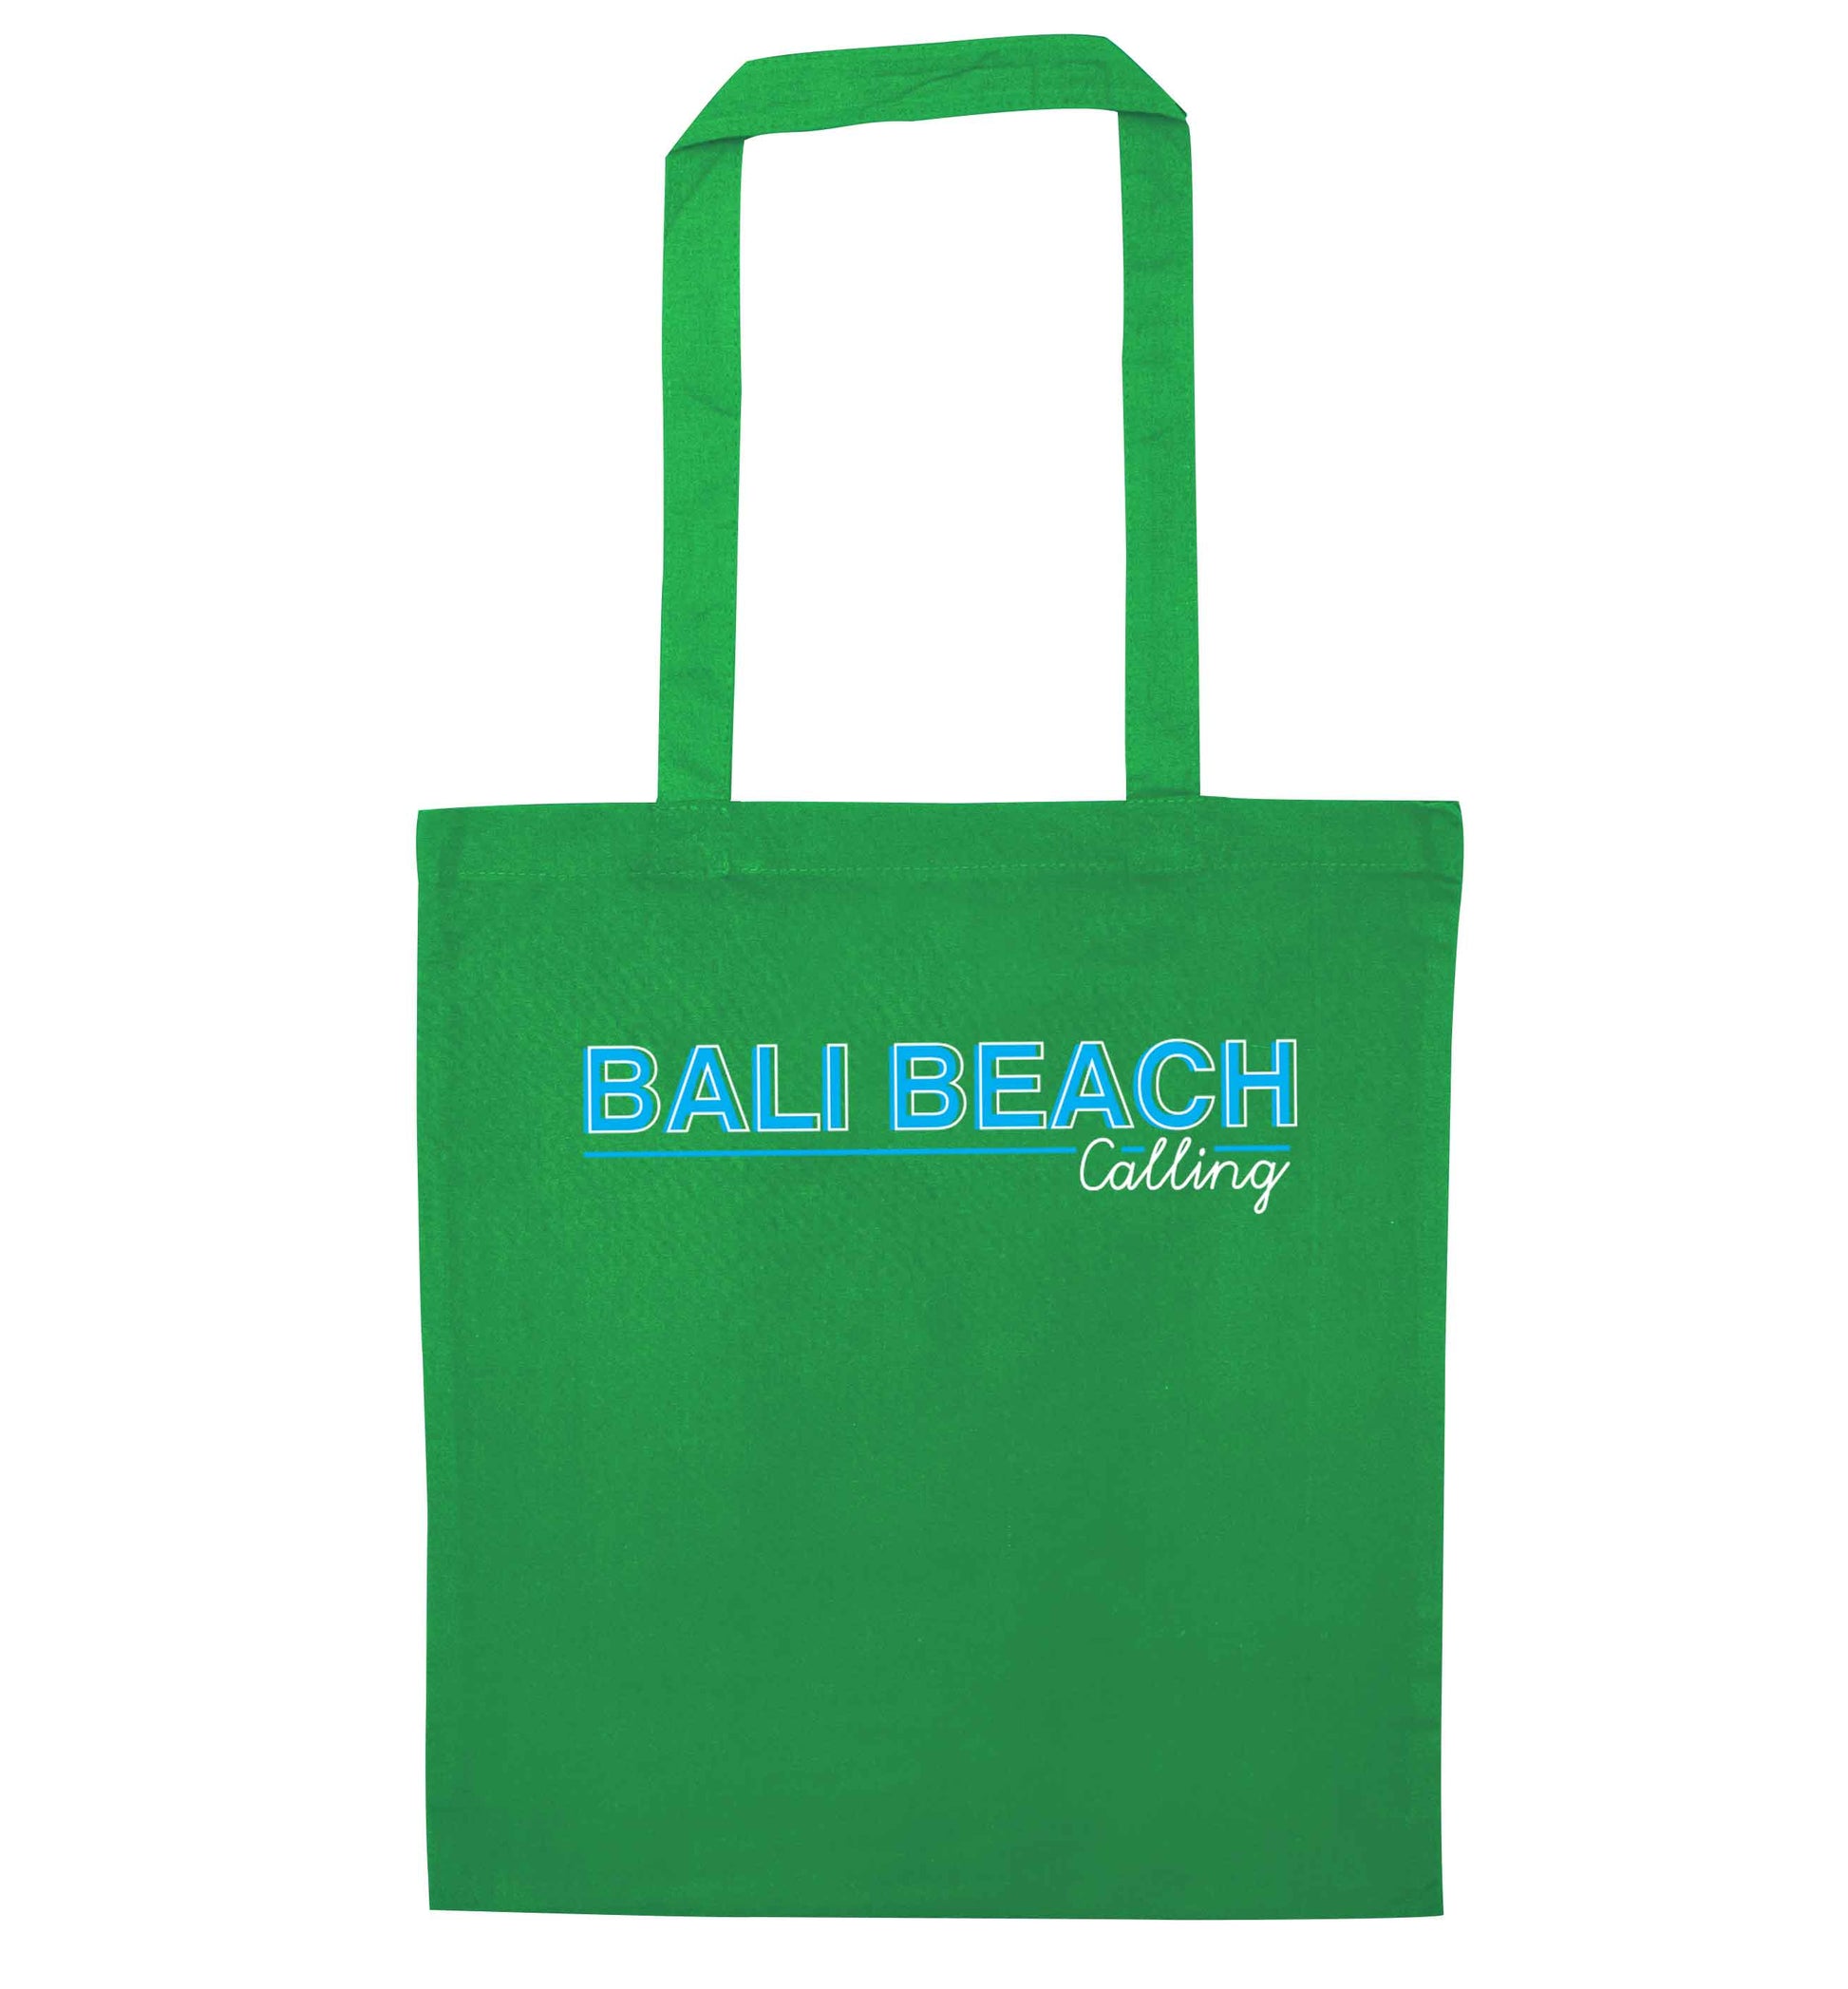 Bali beach calling green tote bag